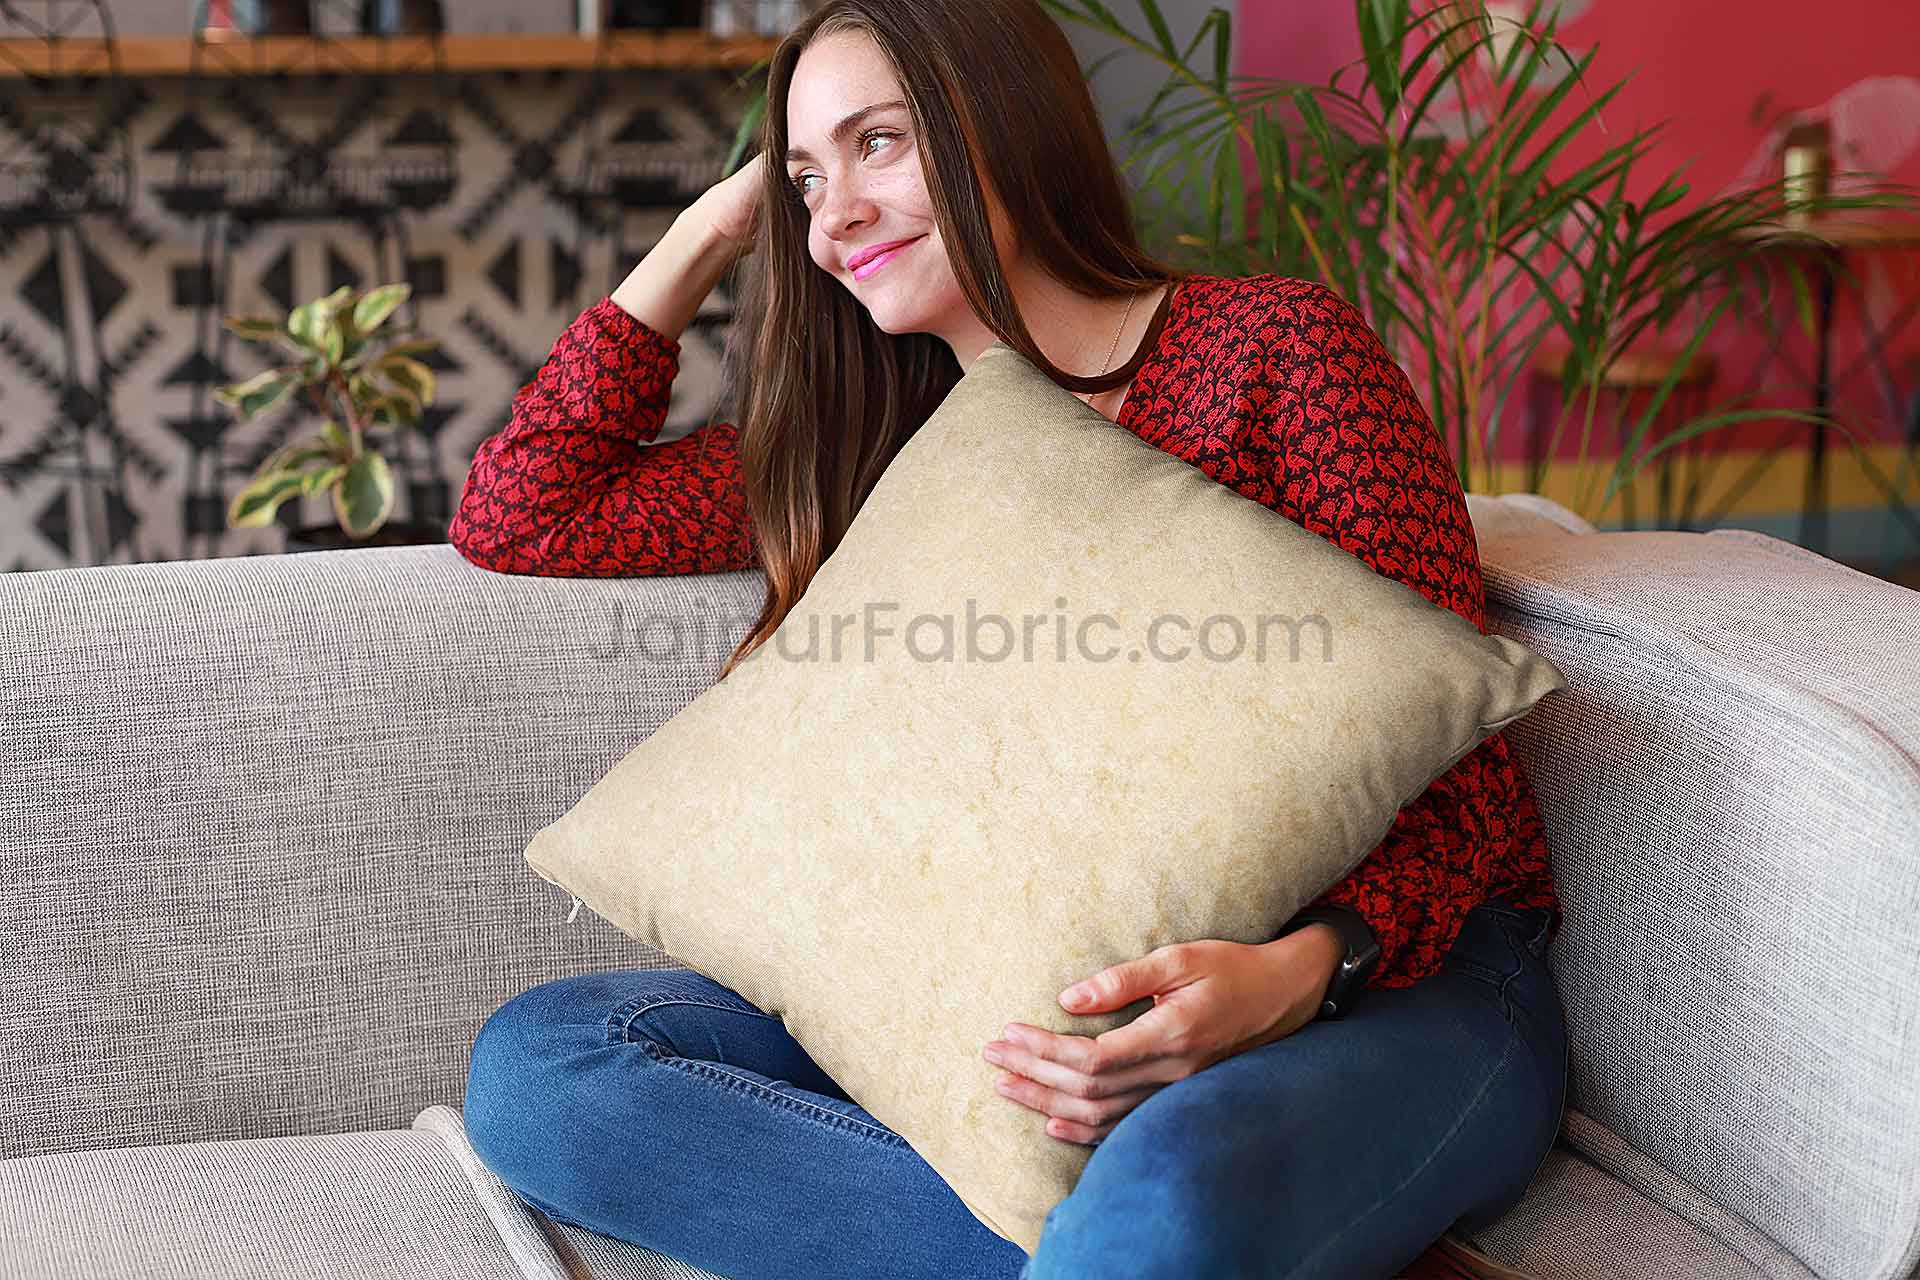 Cream Decorative Super Soft Velvet Cushion Cover